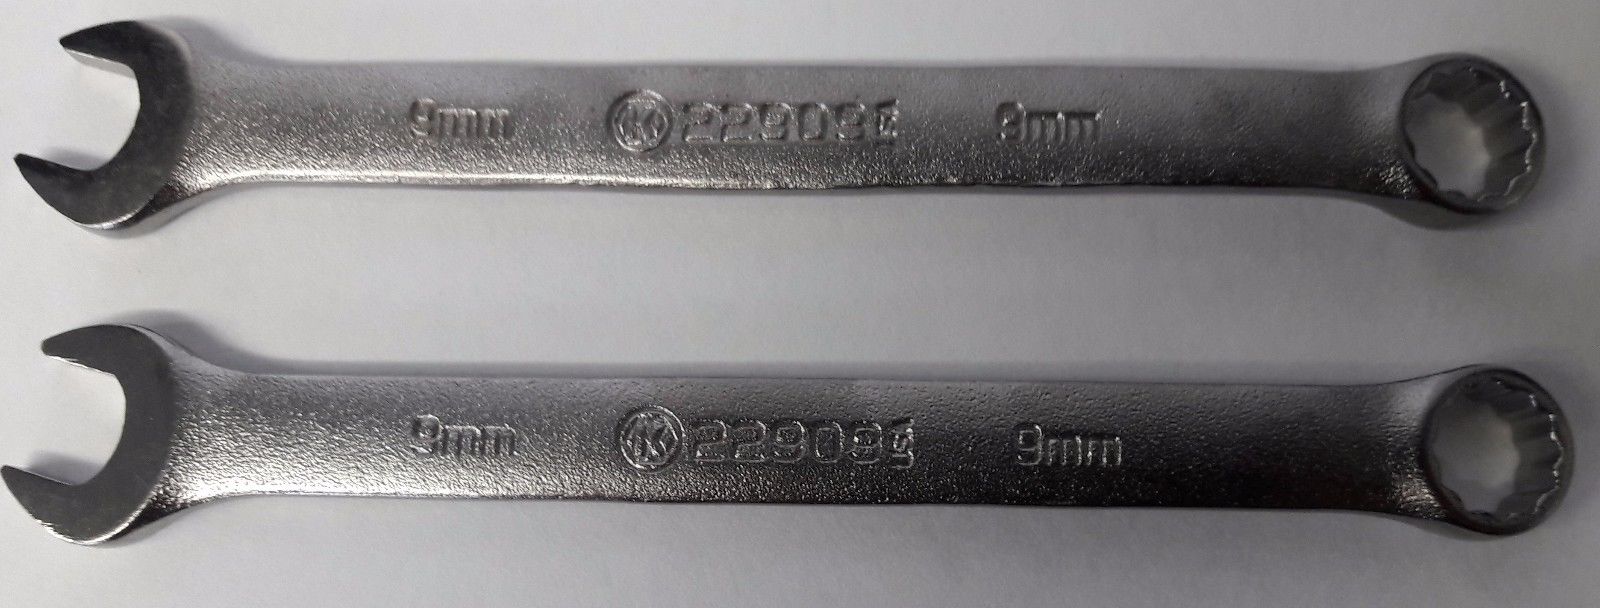 Kobalt 9mm Combination Wrench 12pt USA 22909 2pcs